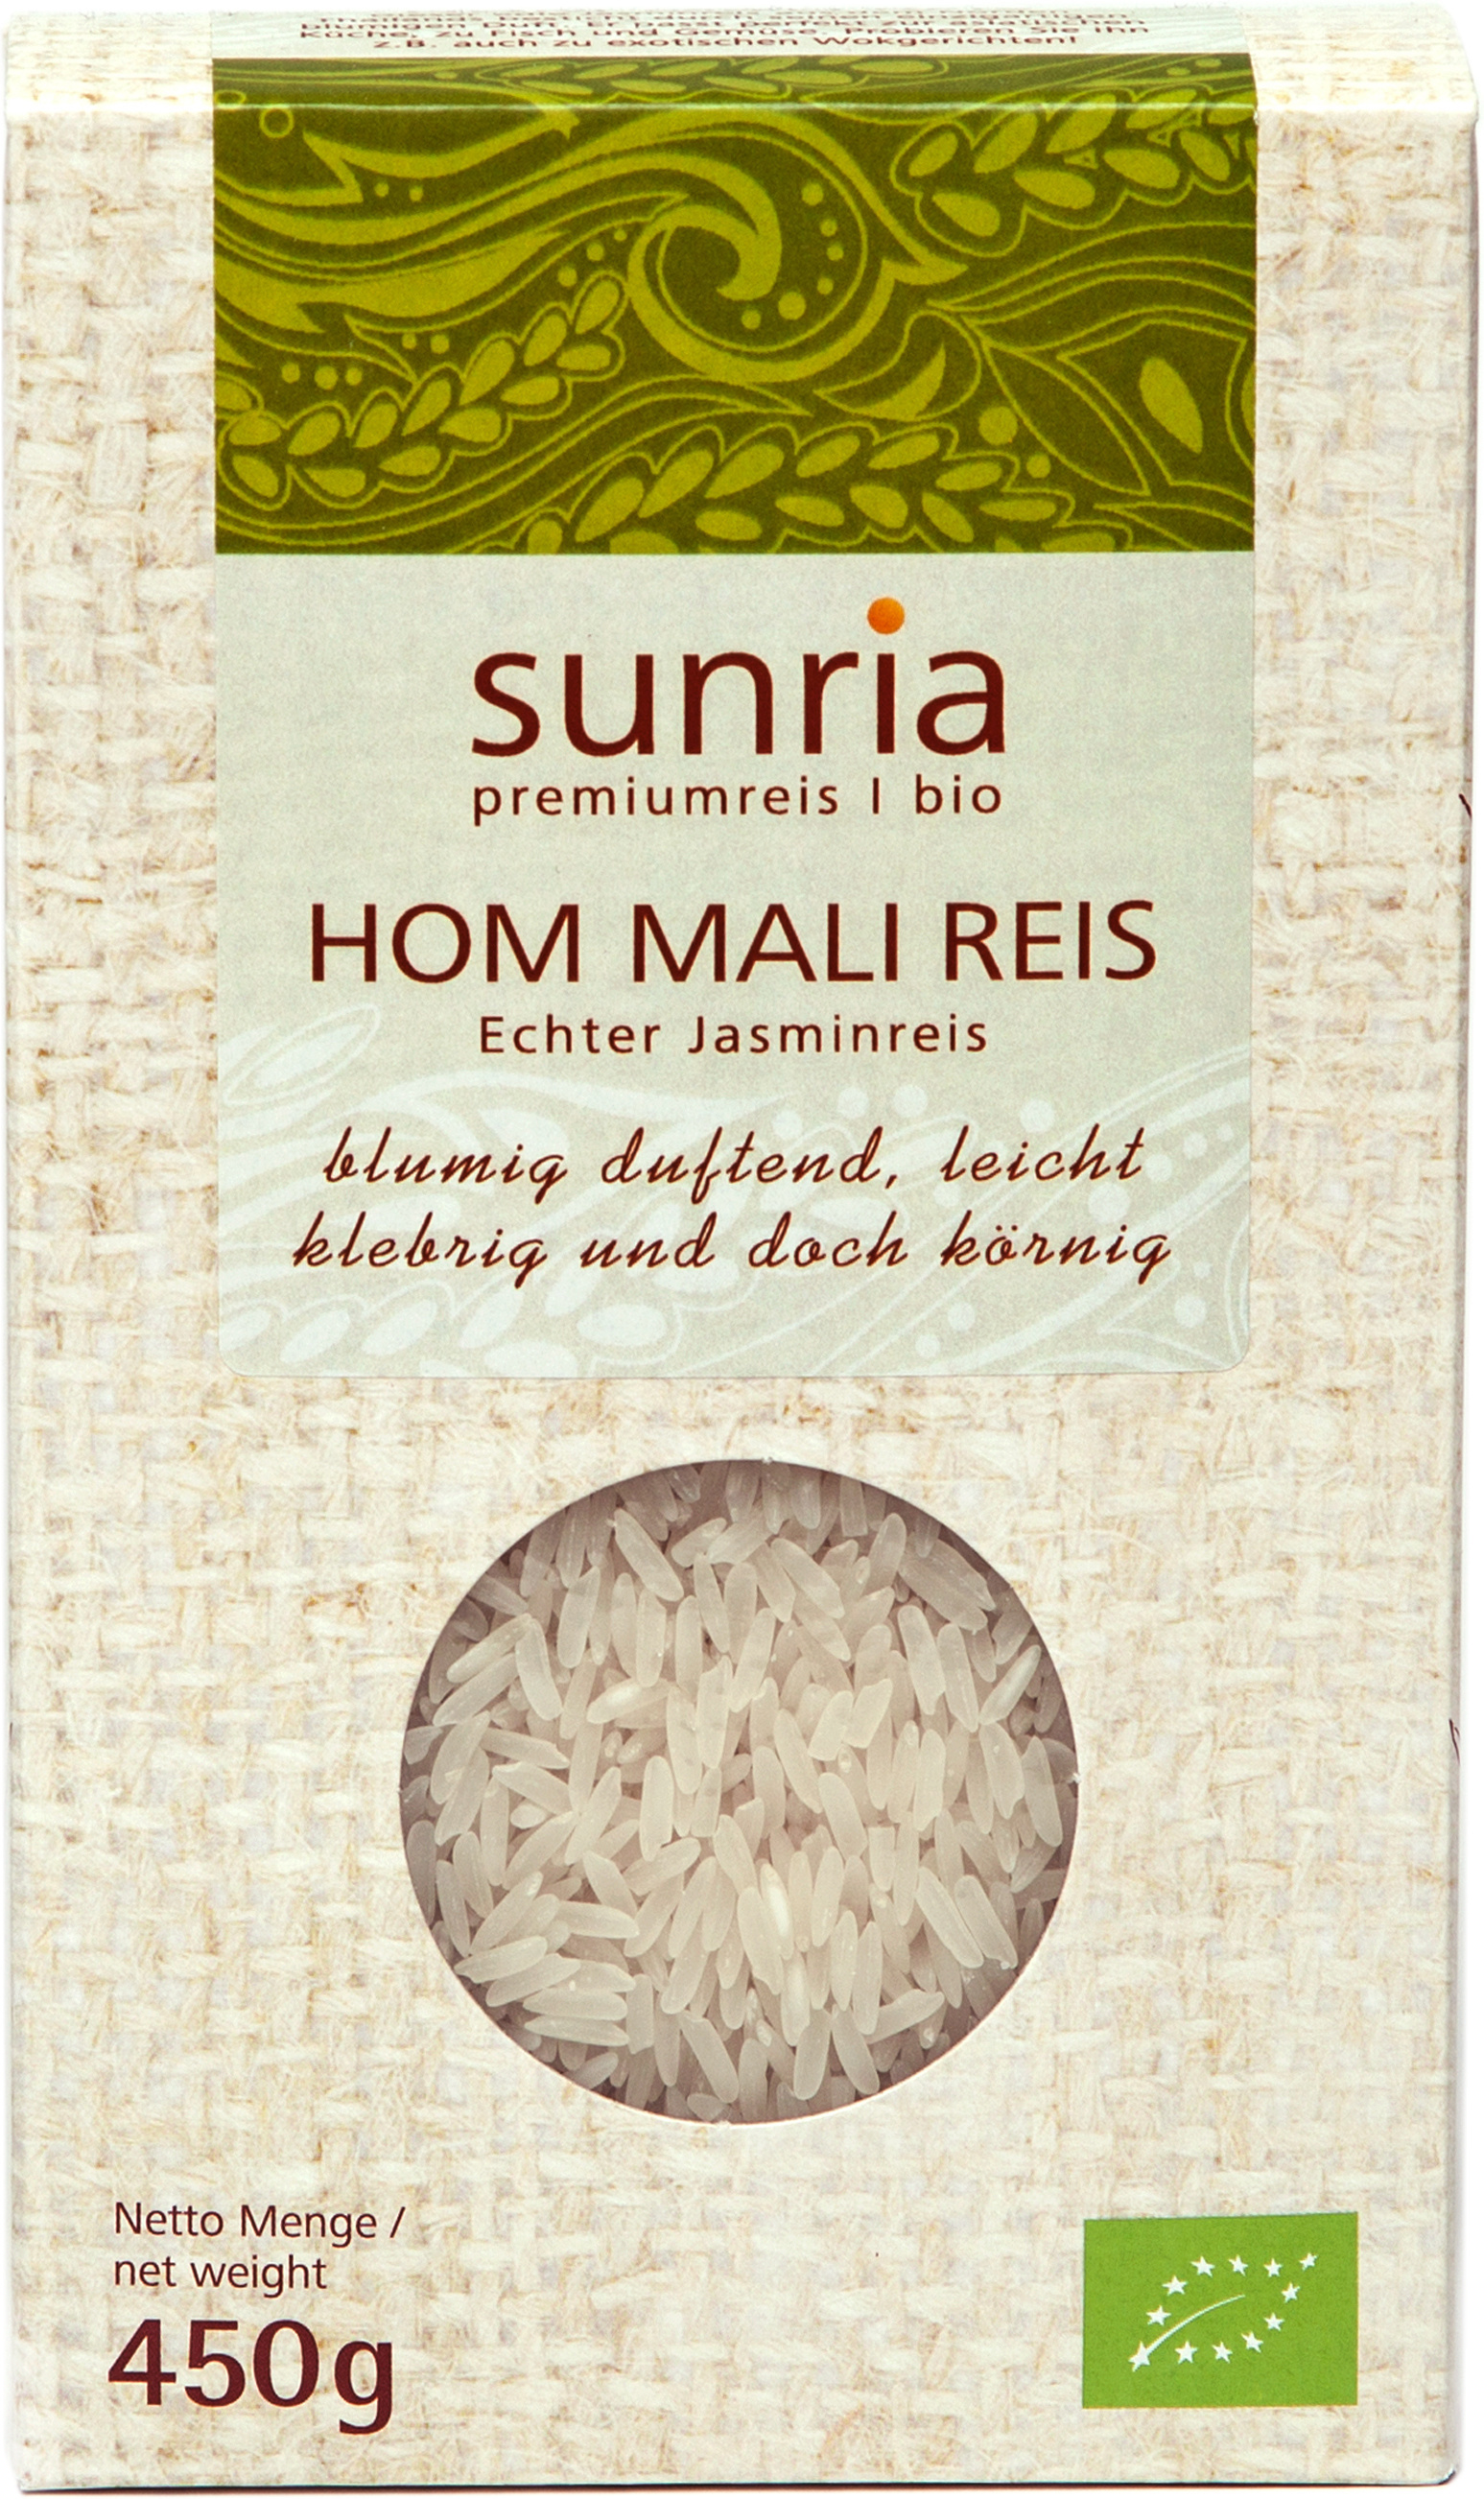 Sunria Hom Mali Rice - Product